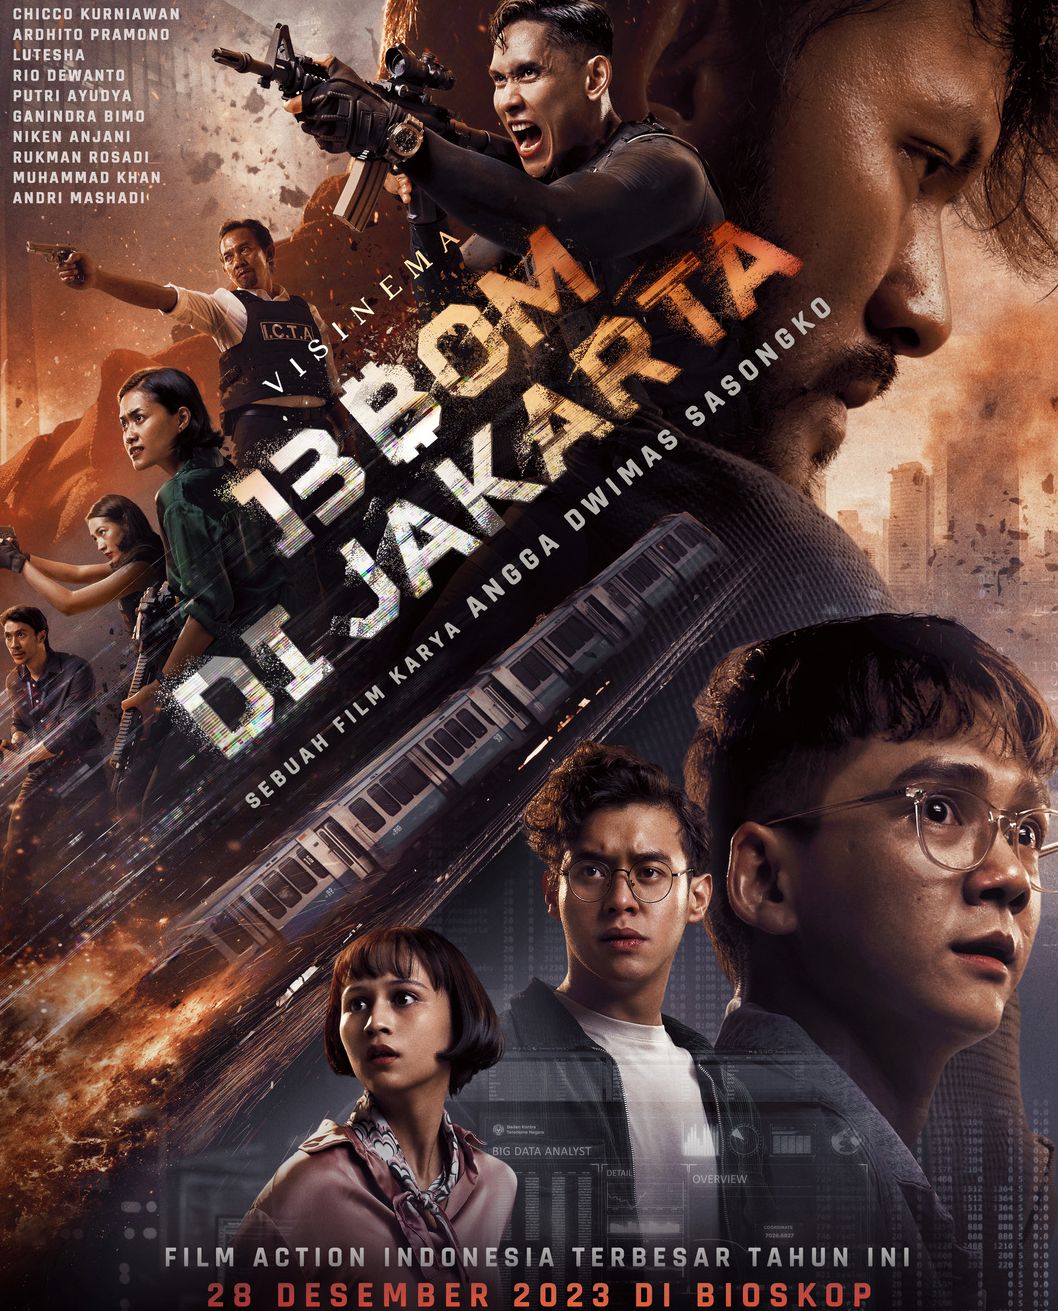 Poster Terbaru Film 13 Bom di Jakarta Tunjukkan Gerbong Kereta Meledak 